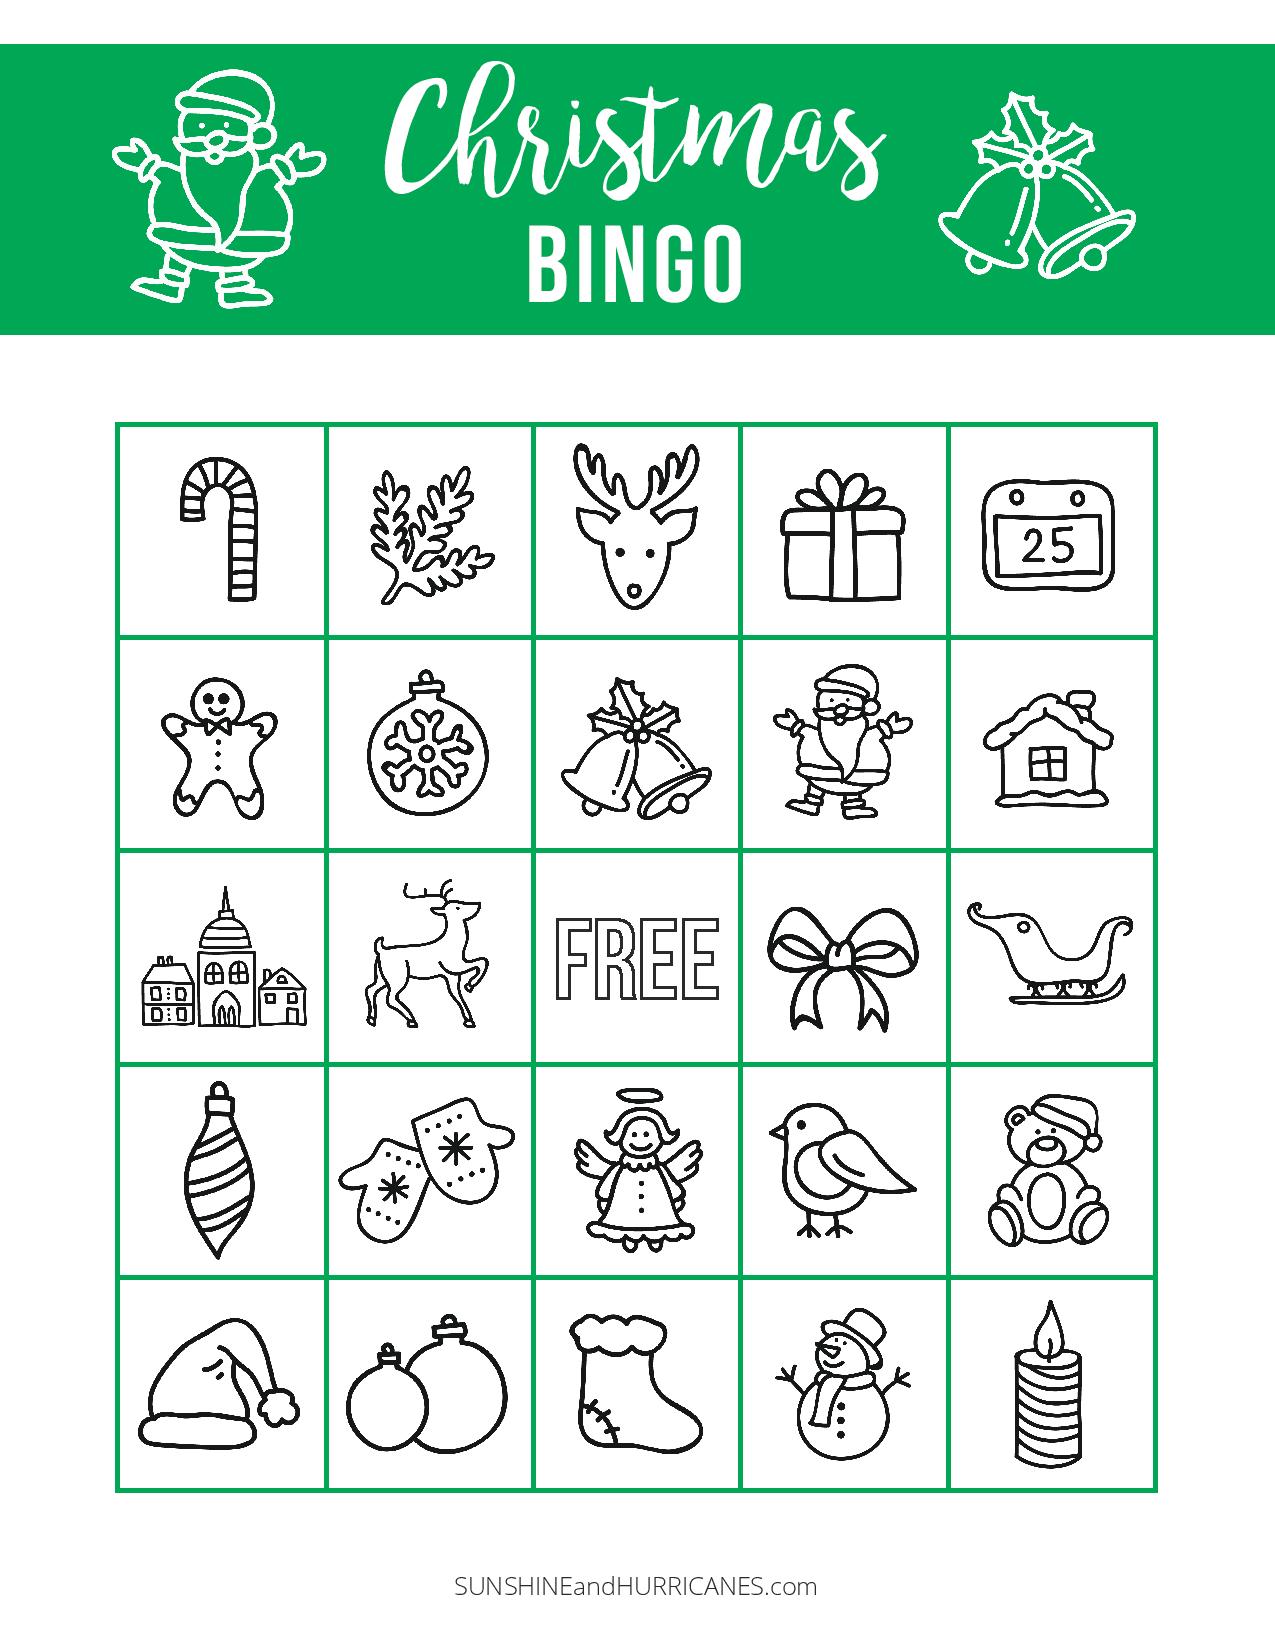 Free Printable Christmas Bingo For Preschoolers FREE PRINTABLE TEMPLATES